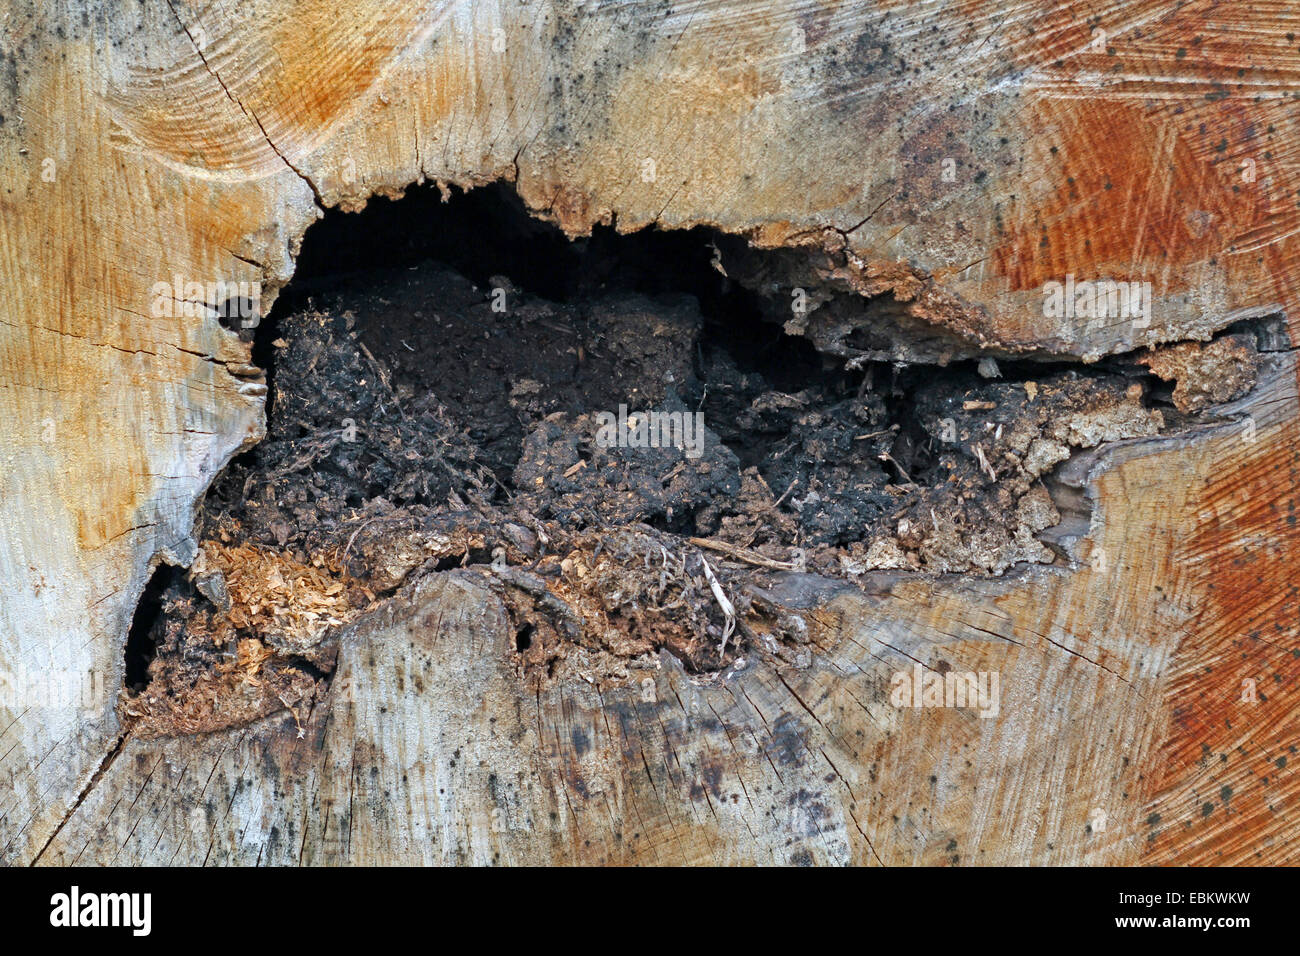 heart rot of a tree trunk, Germany Stock Photo